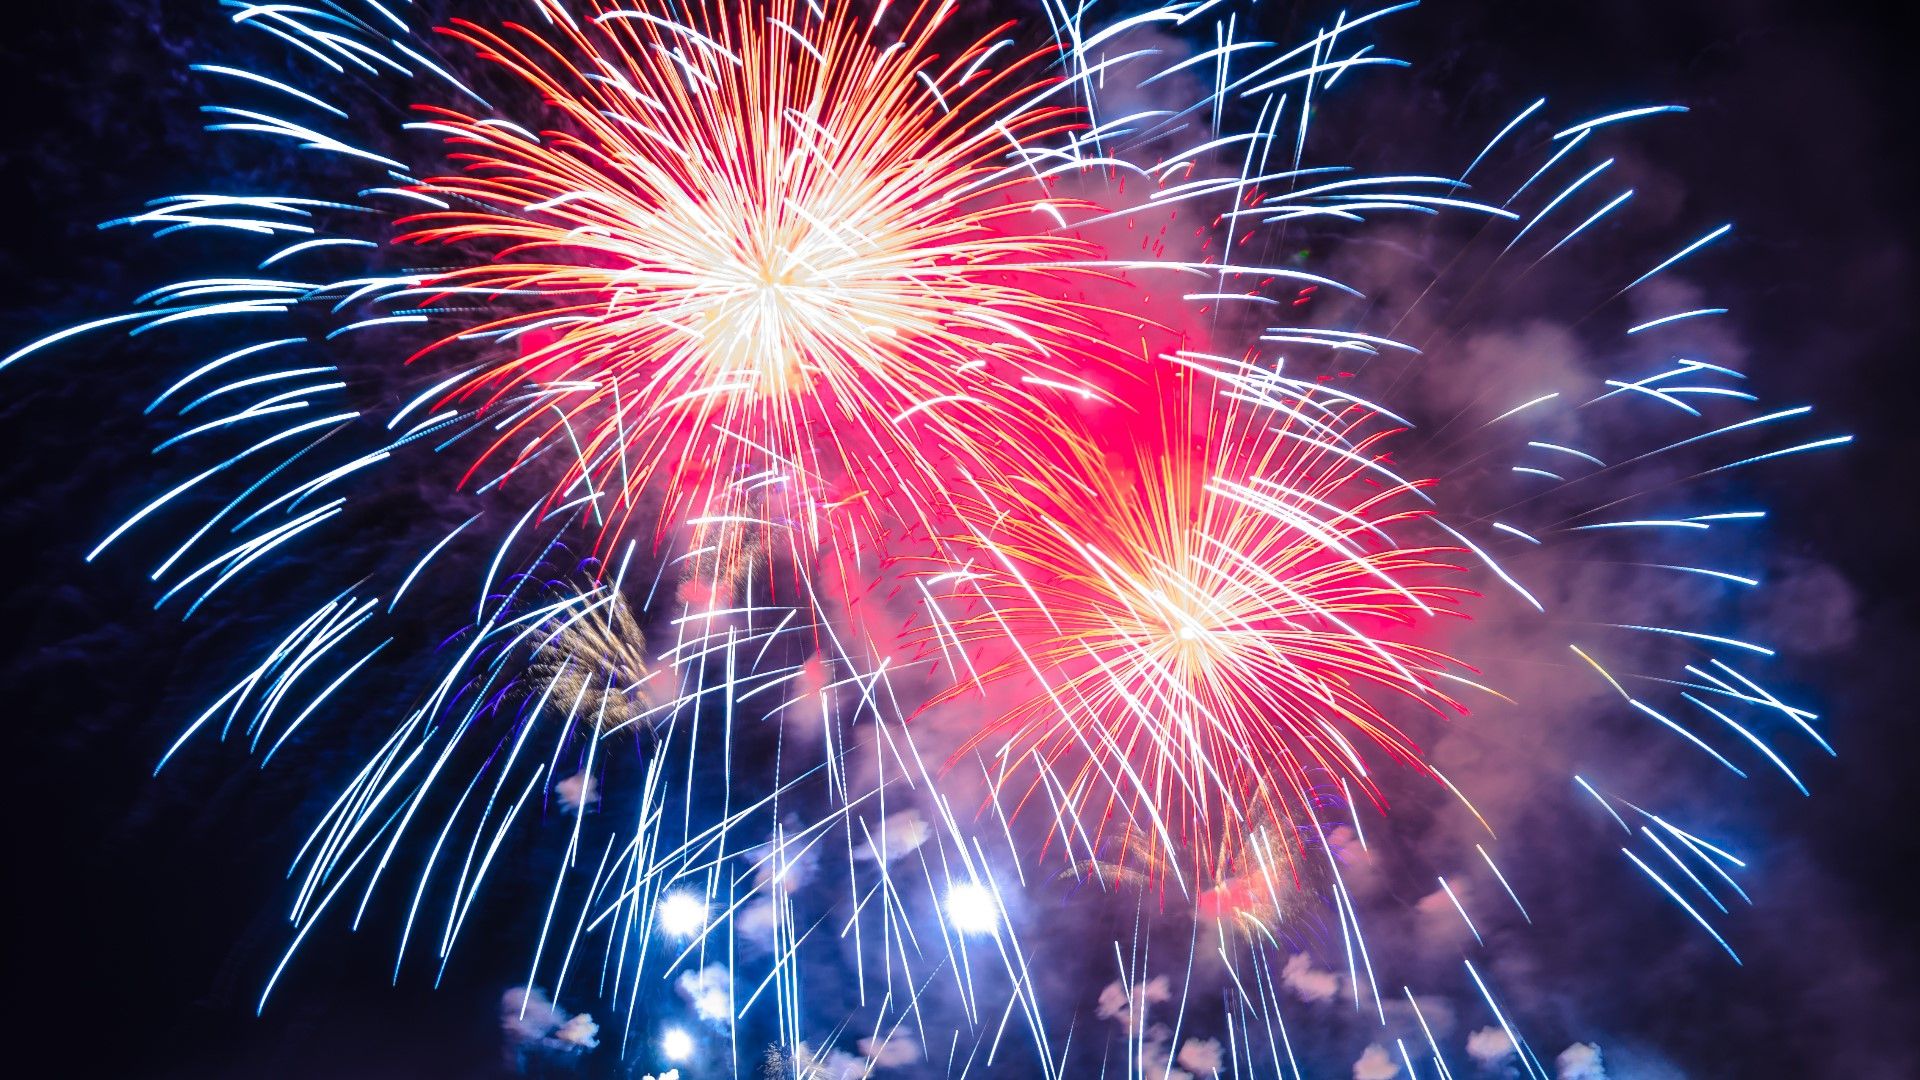 How to take amazing fireworks photo on your phonenews.com